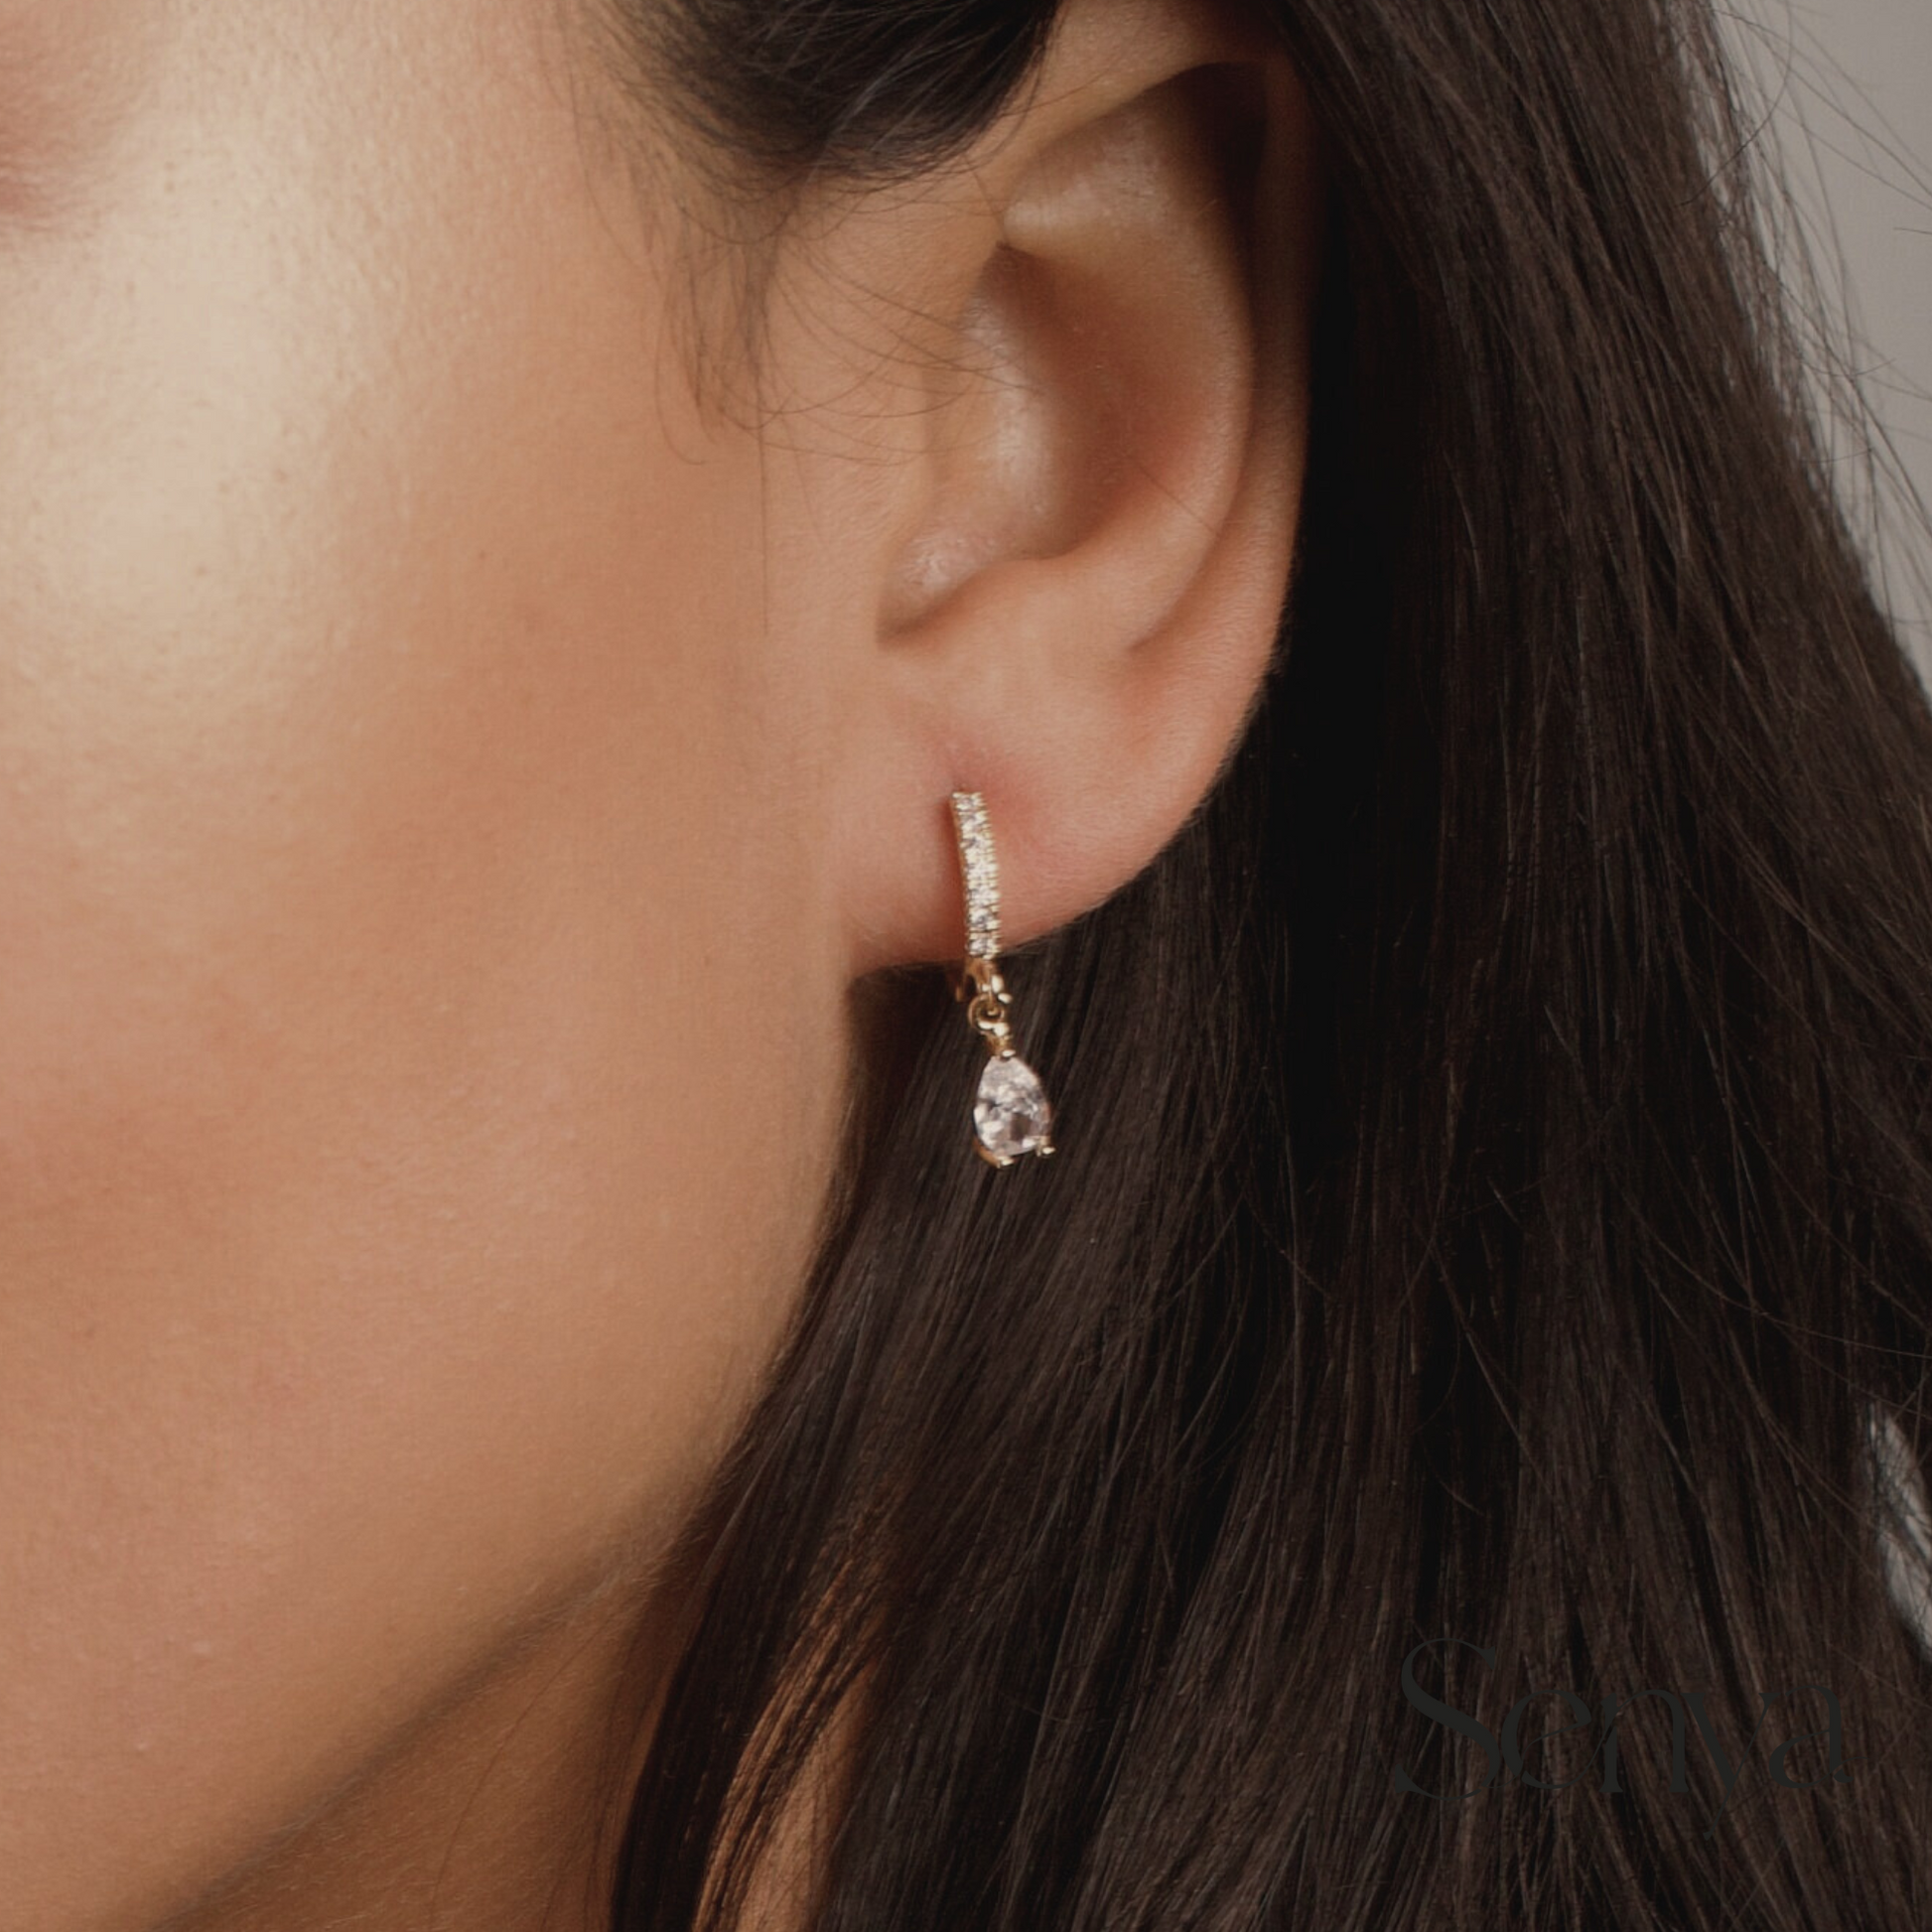 Pear-shaped zirconia earrings, Hoop earrings with stunning zirconia details, Zirconia-filled hoops with pear-shaped centerpiece, Earrings with shimmering white zirconias, Pear-shaped zirconia hoop earrings.